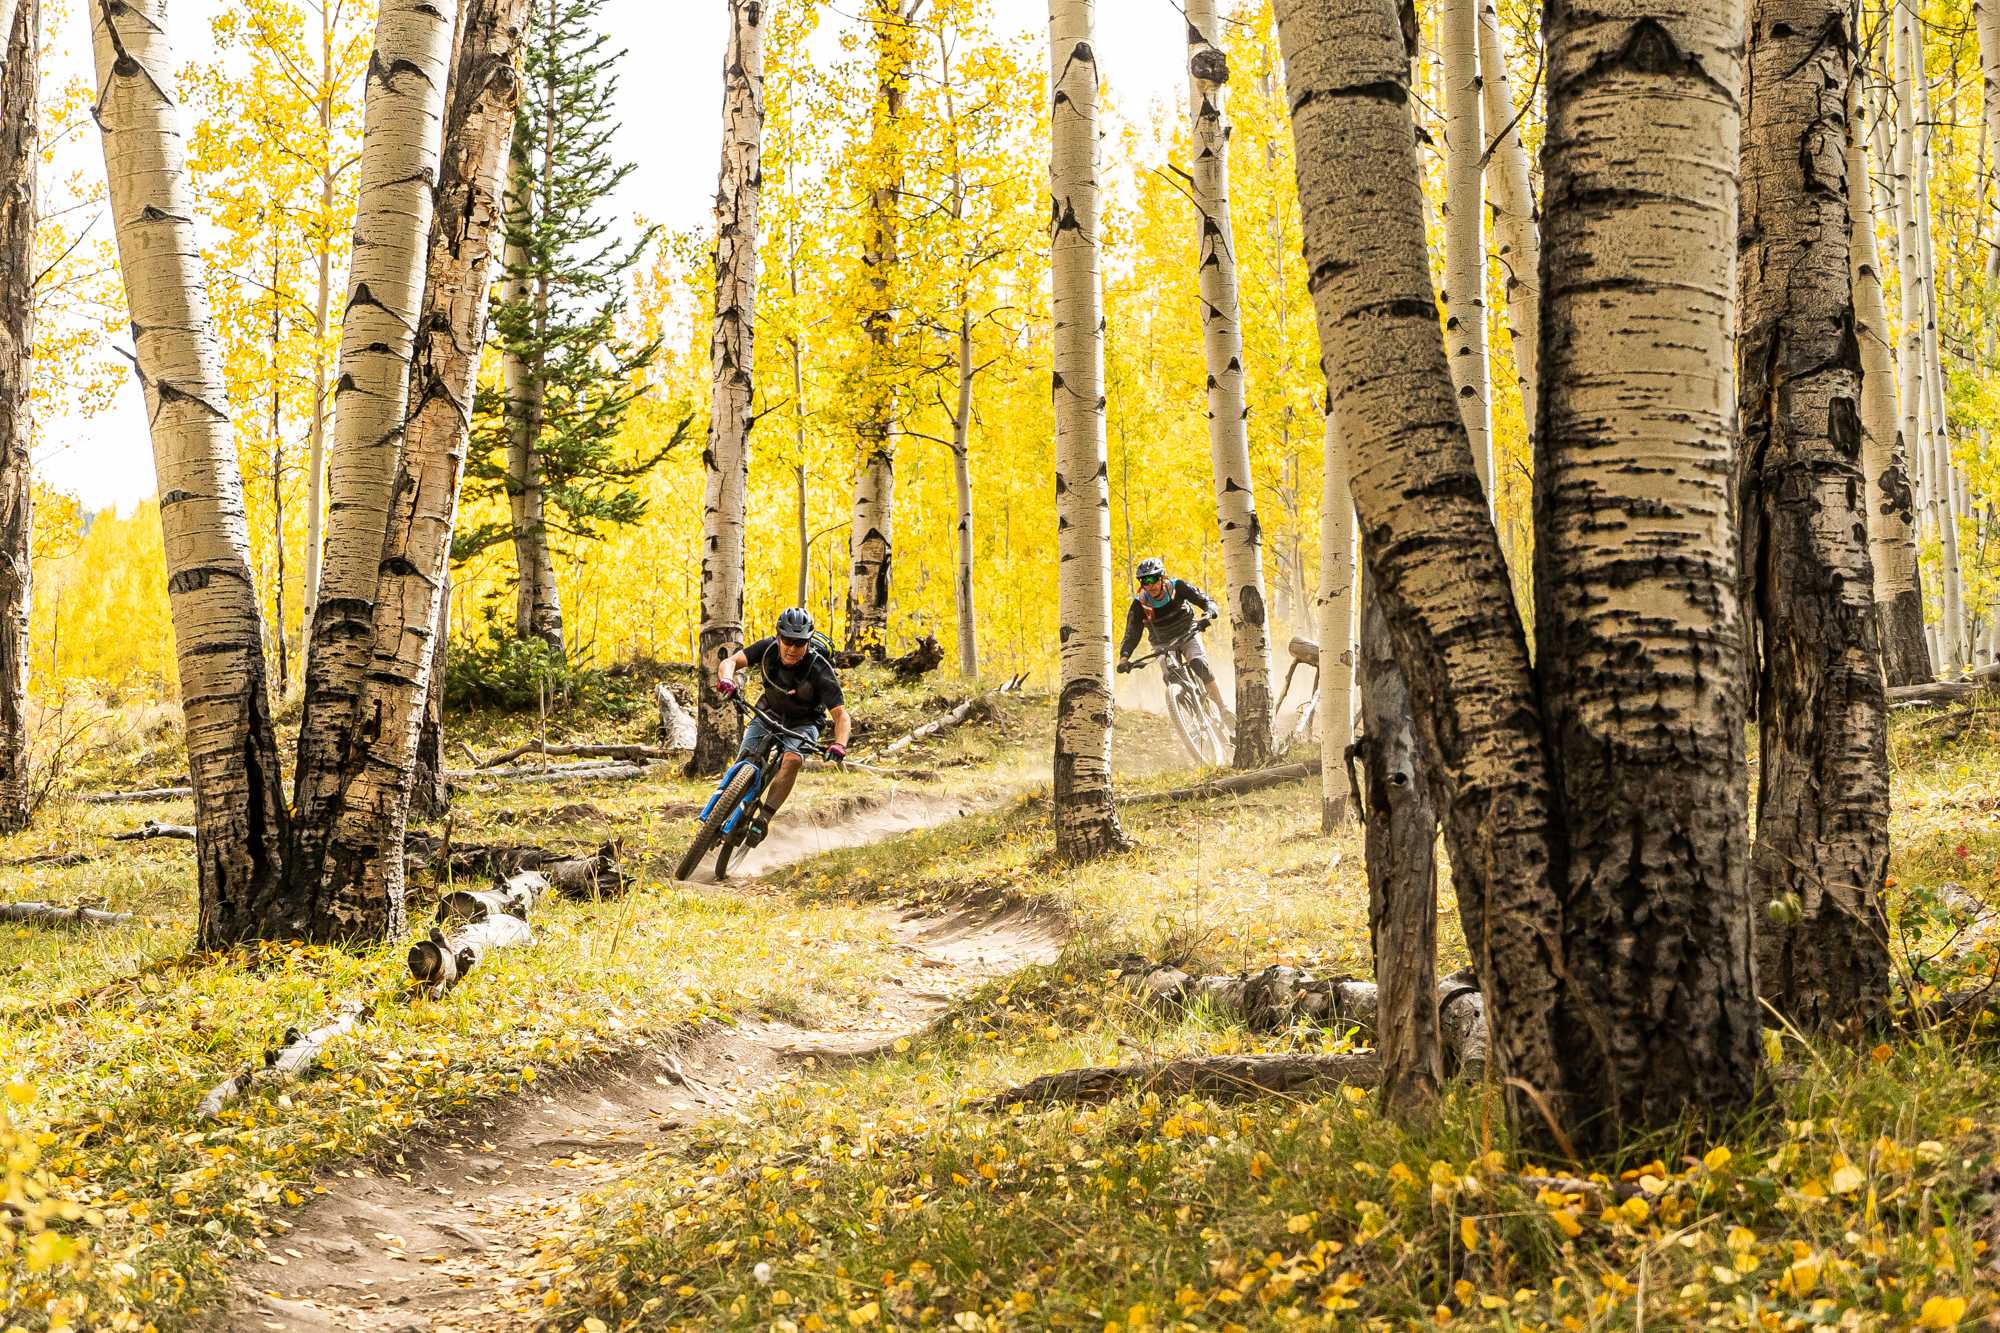 Mountain bikers riding through yellow fall foliage